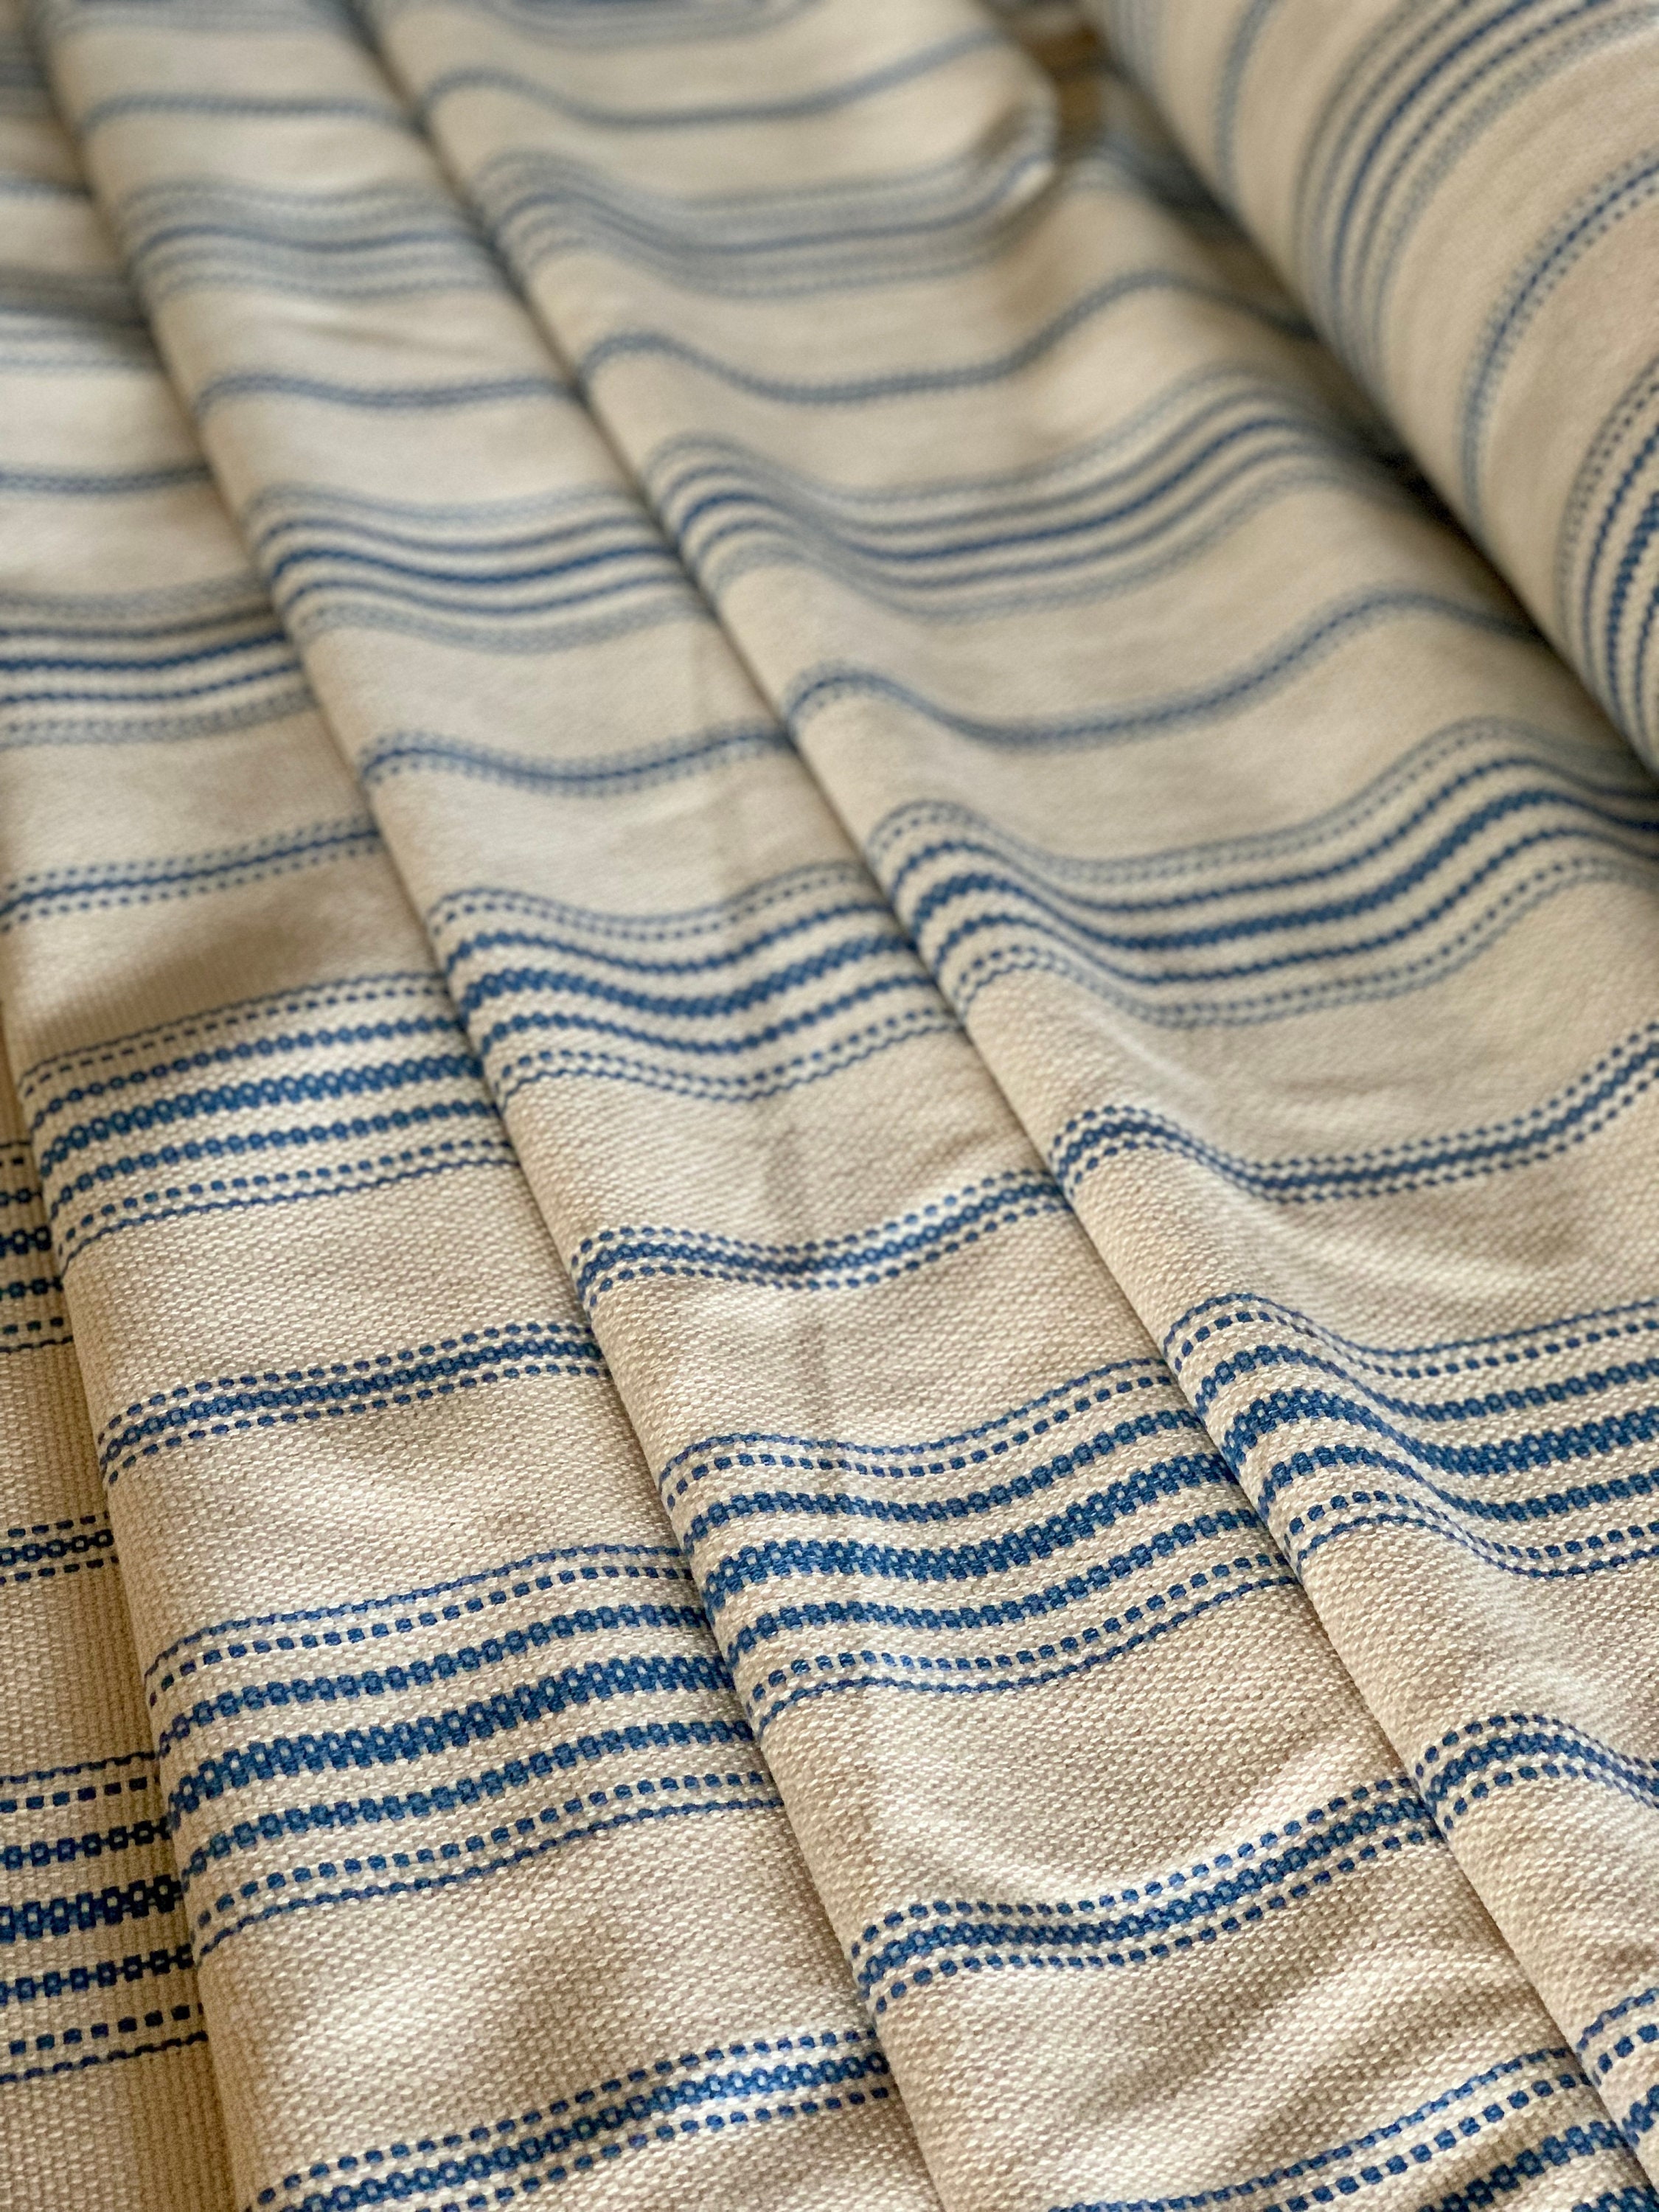 Blue Cotton Duck Stripe Ticking Fabric, Primitive Striped Home Decor  Fabric